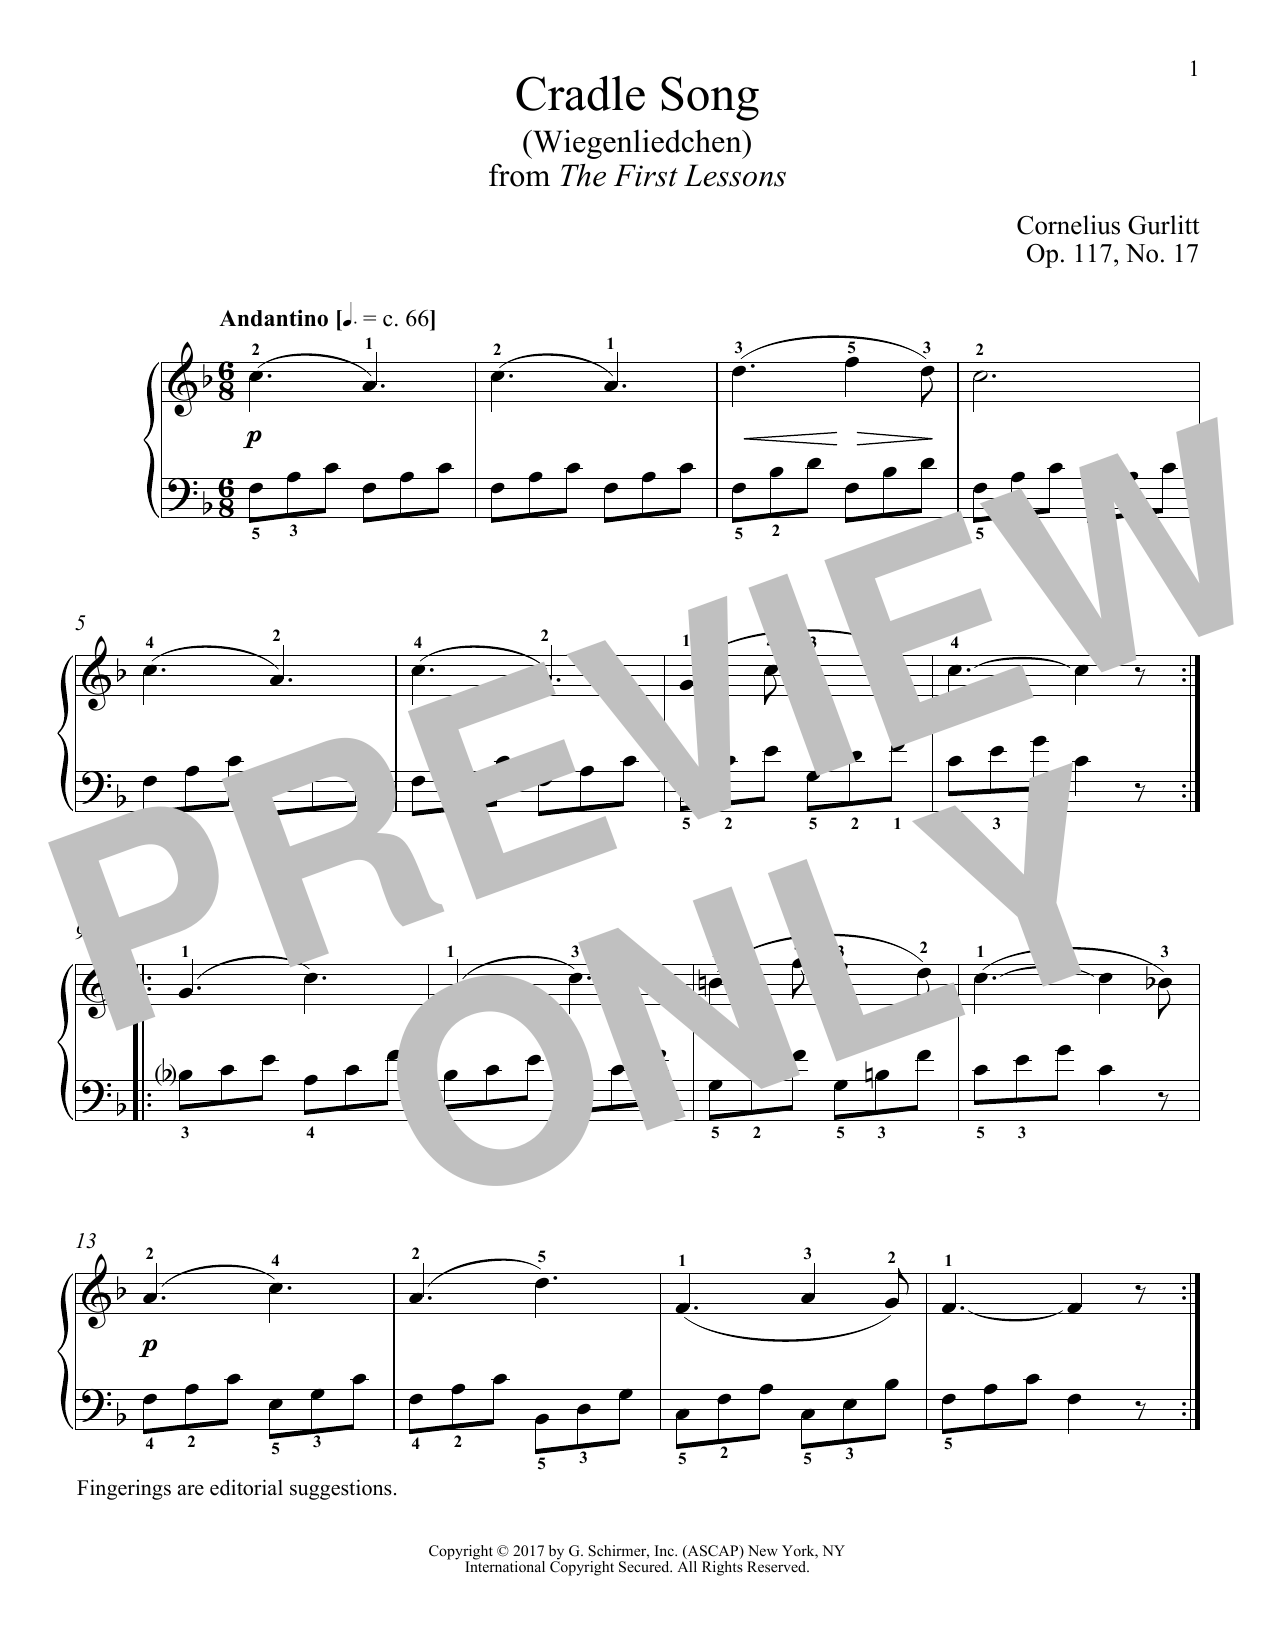 Cornelius Gurlitt Cradle Song (Wiegenliedchen), Op. 117, No. 17 Sheet Music Notes & Chords for Piano - Download or Print PDF